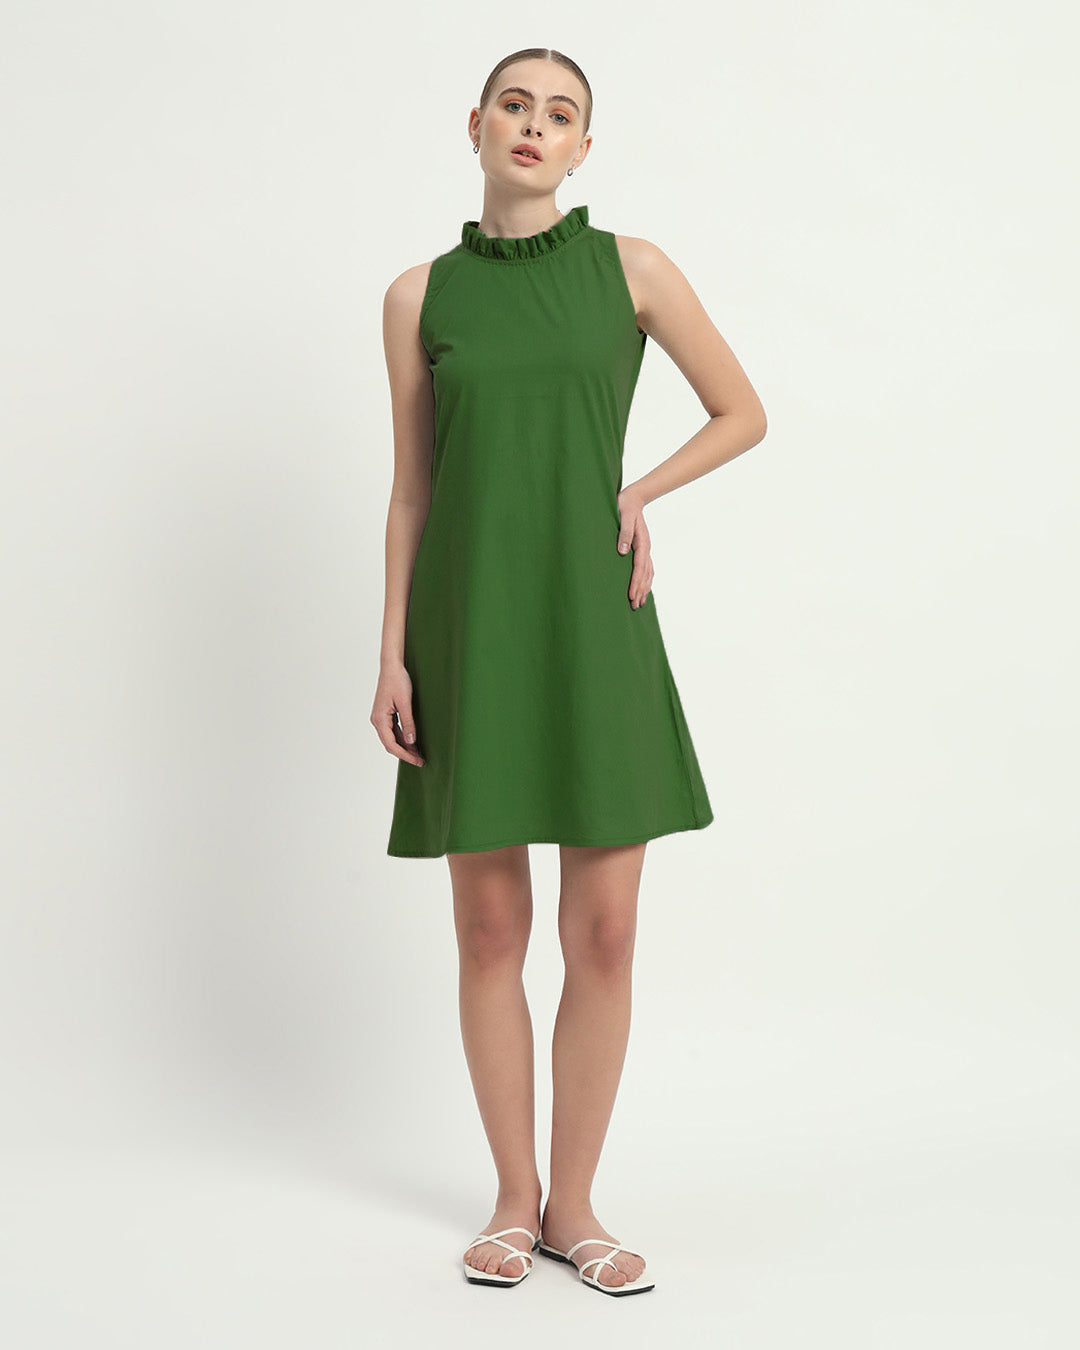 The Angelica Emerald Cotton Dress